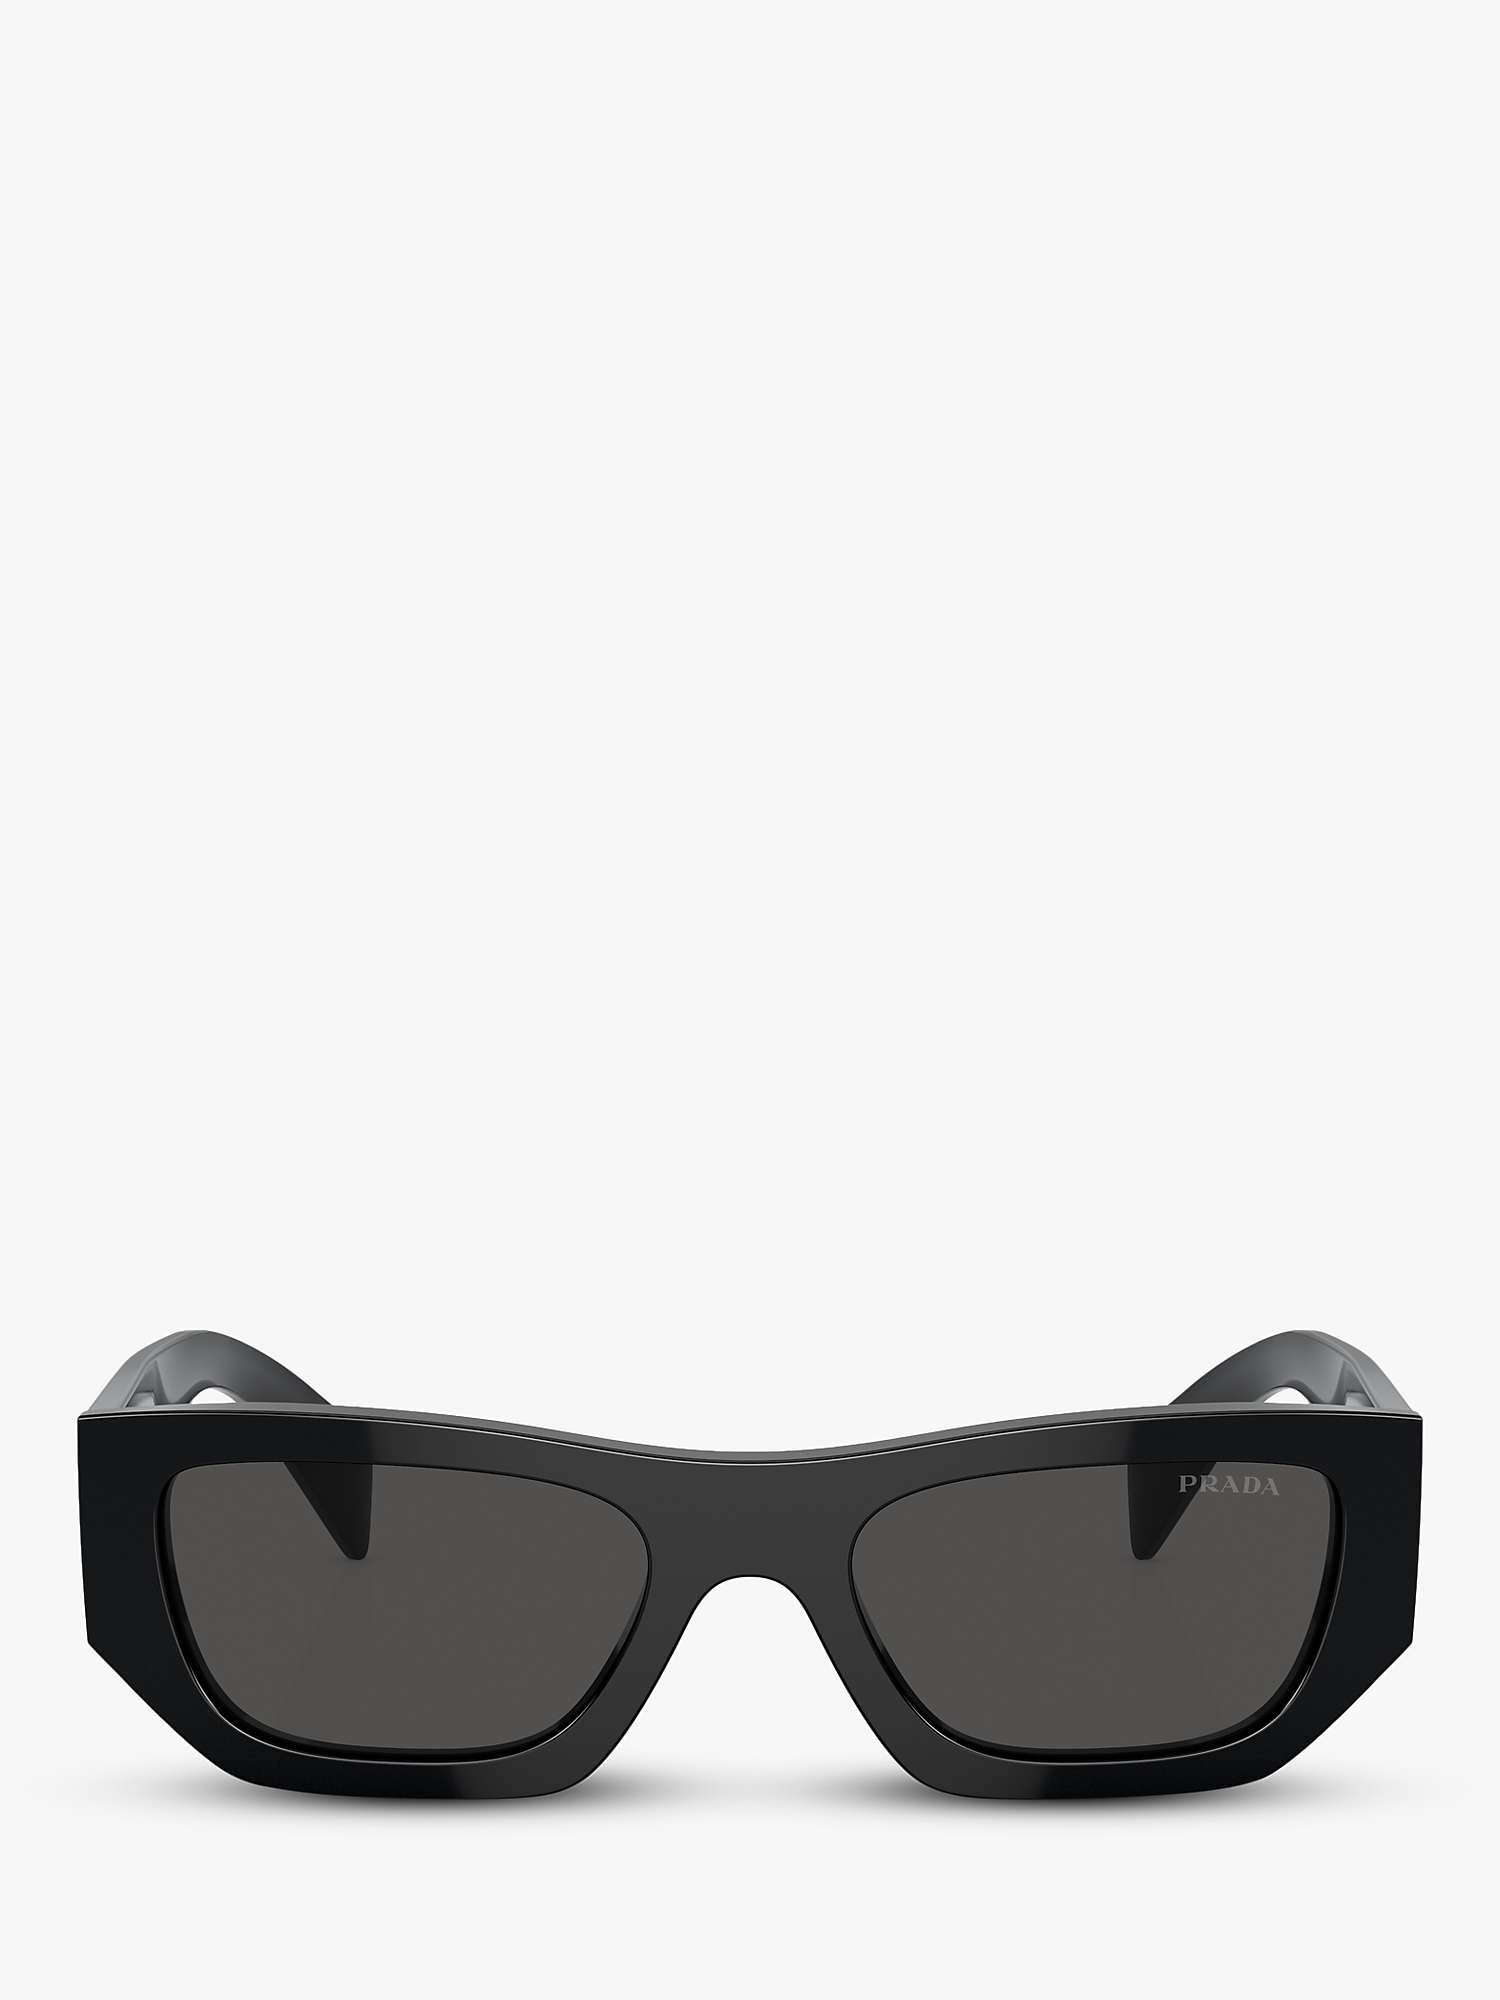 Buy Prada PR A01S Women's Rectangular Sunglasses, Black/Grey Online at johnlewis.com